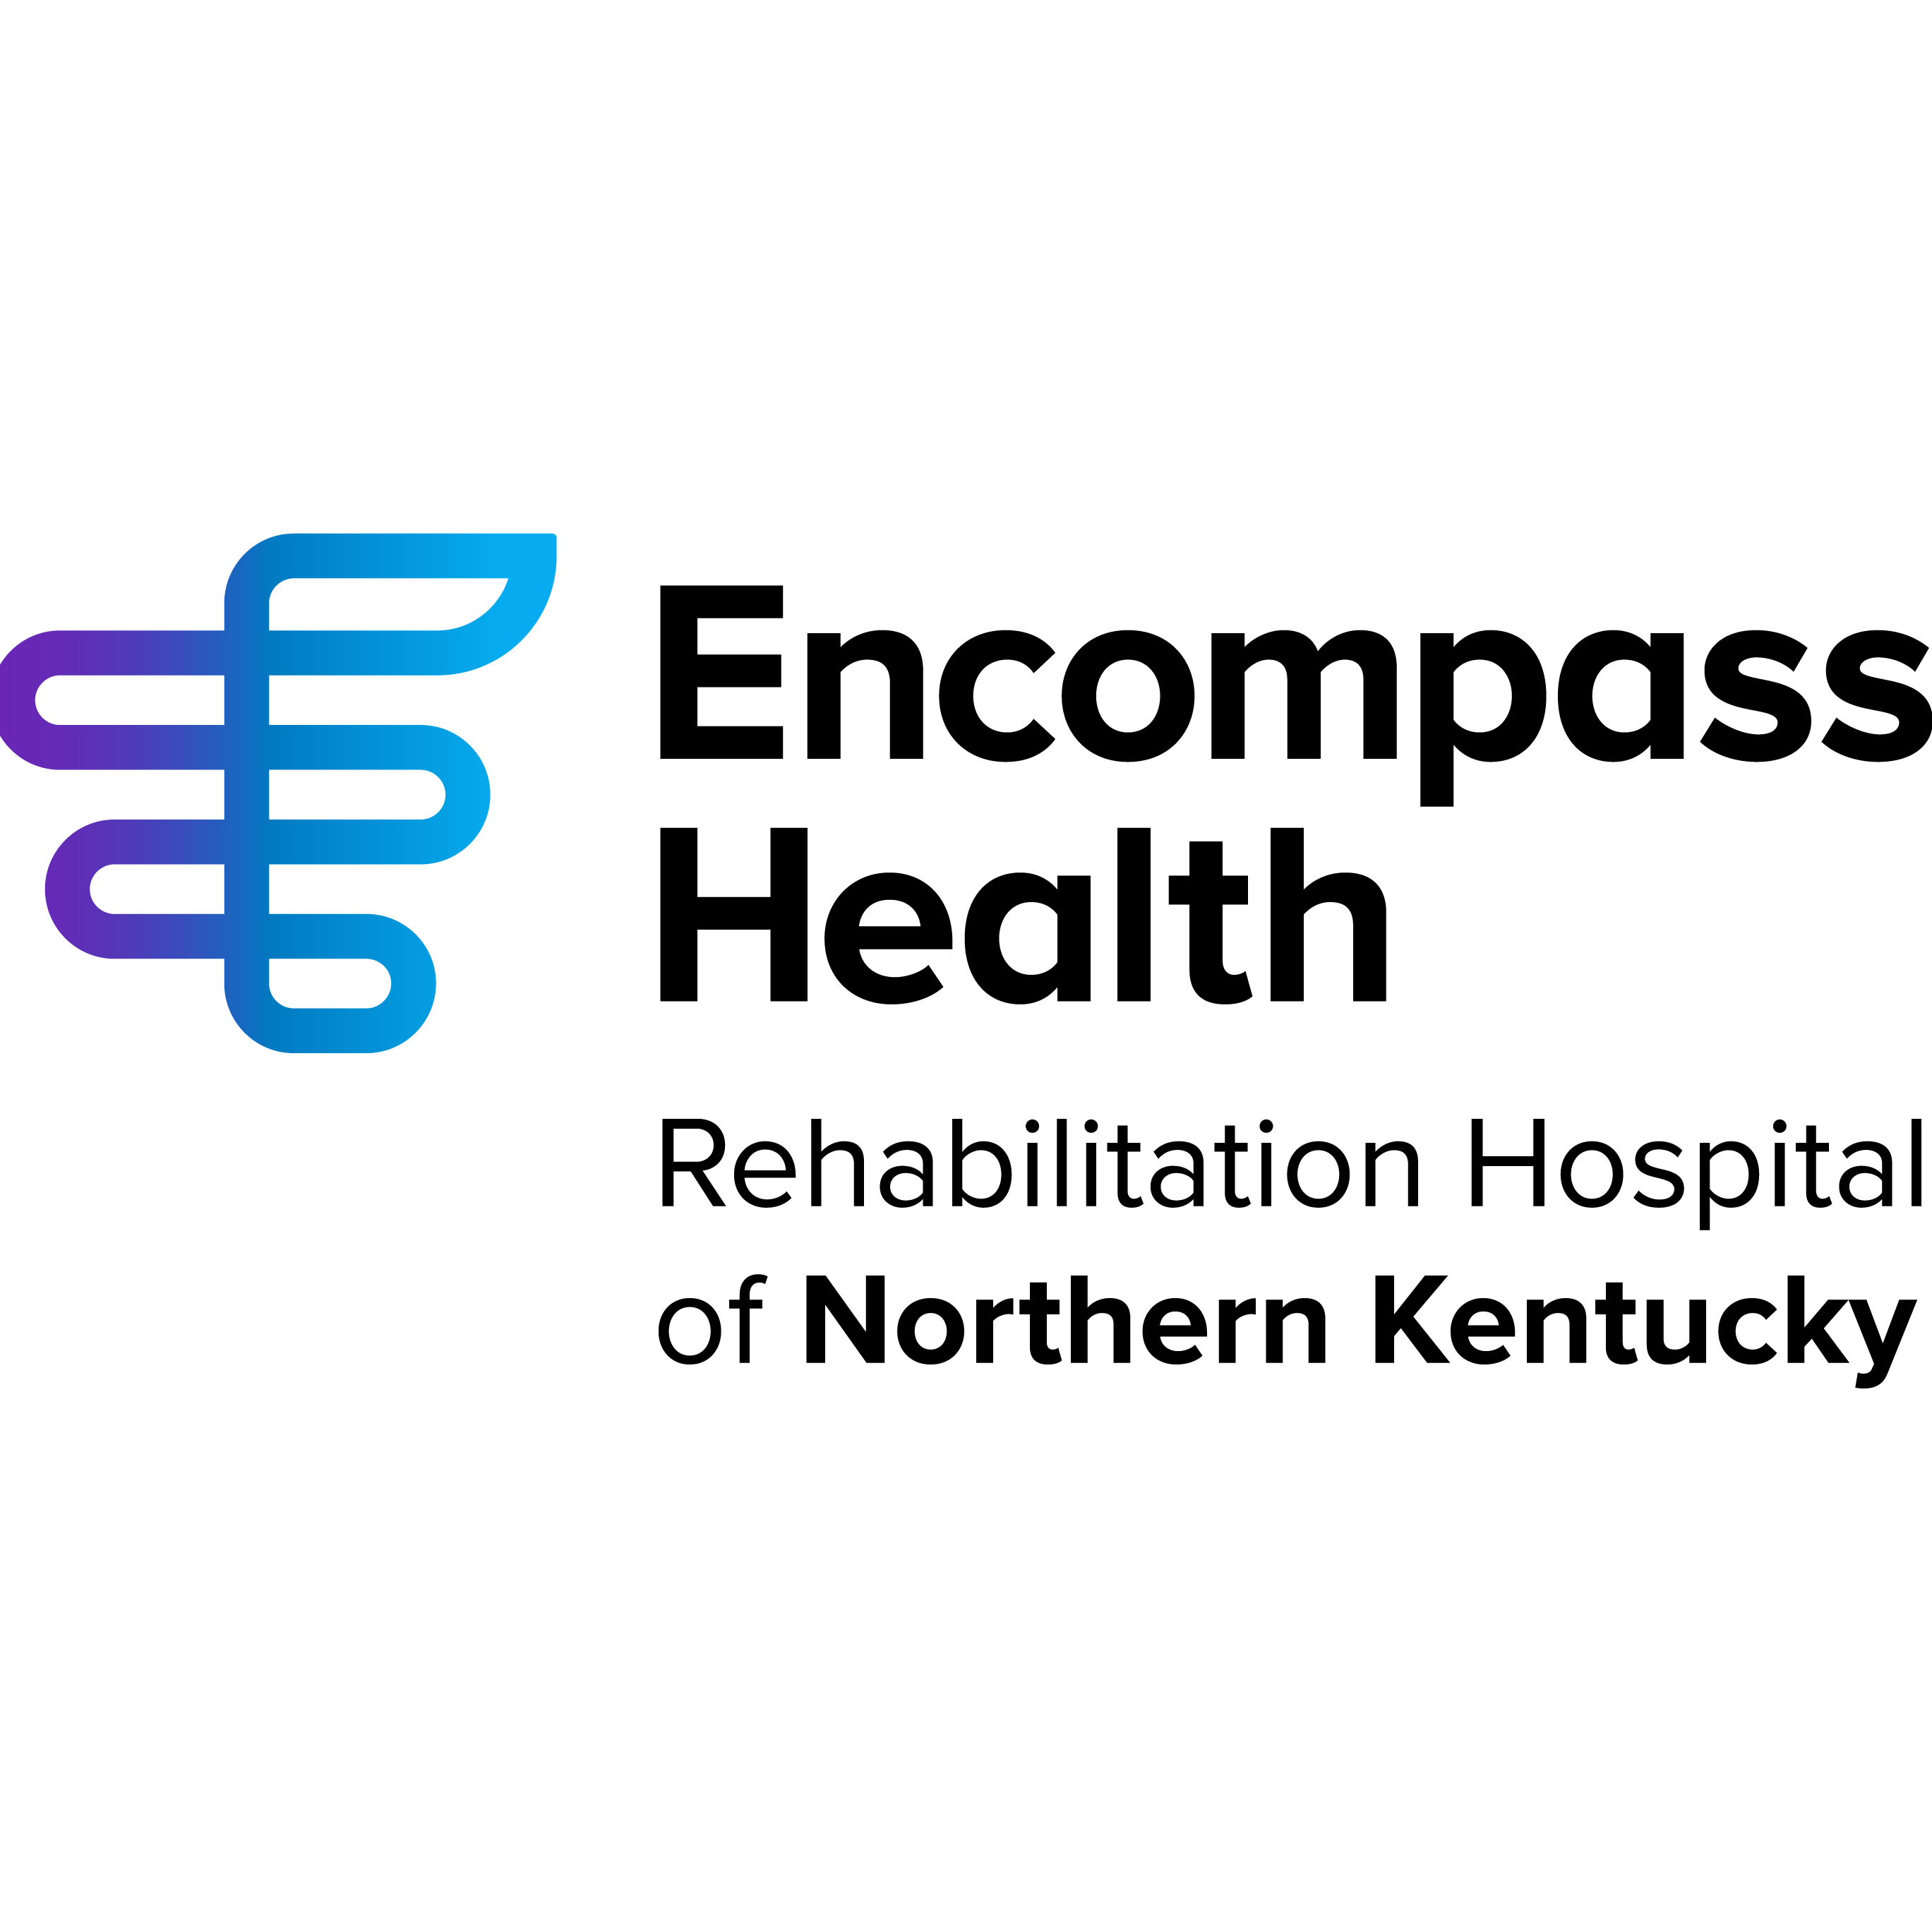 Encompass Health Rehabilitation Hospital of Northern Kentucky Photo